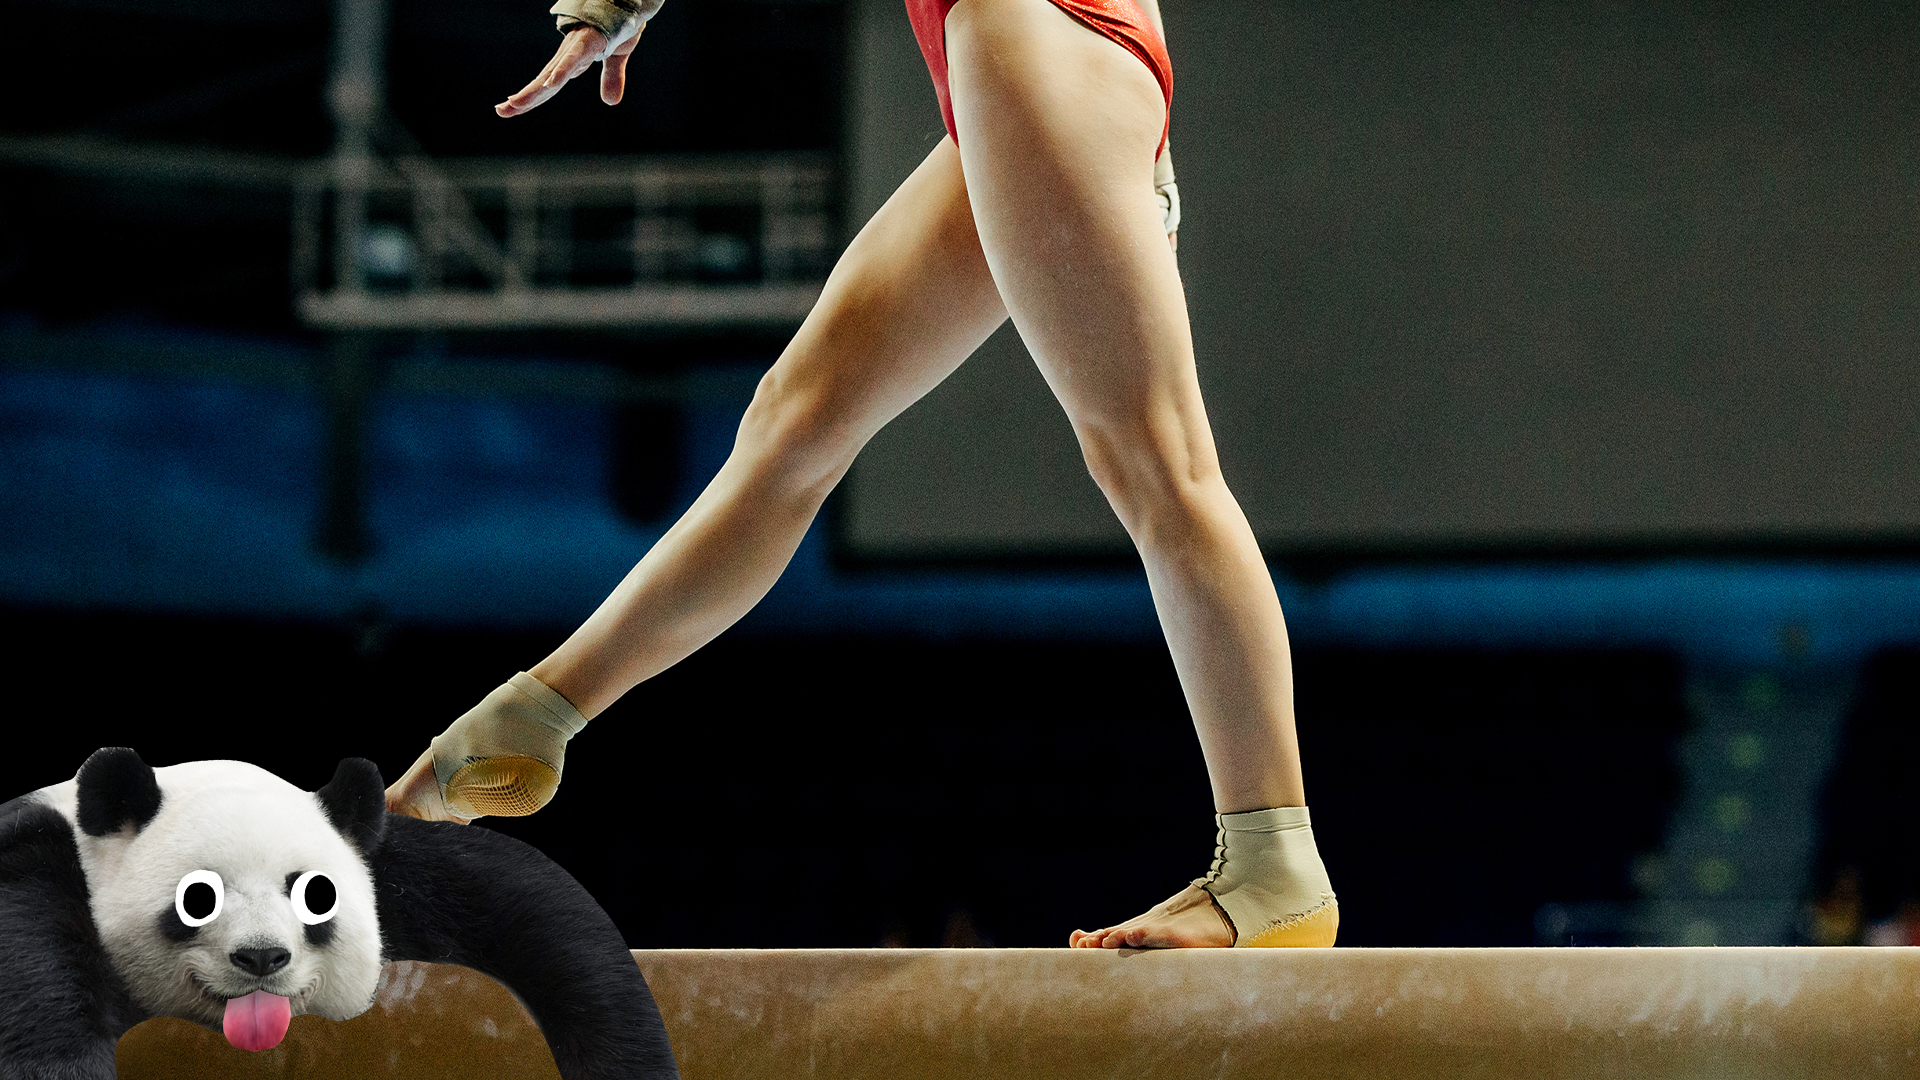 Gymnast on beam with derpy panda